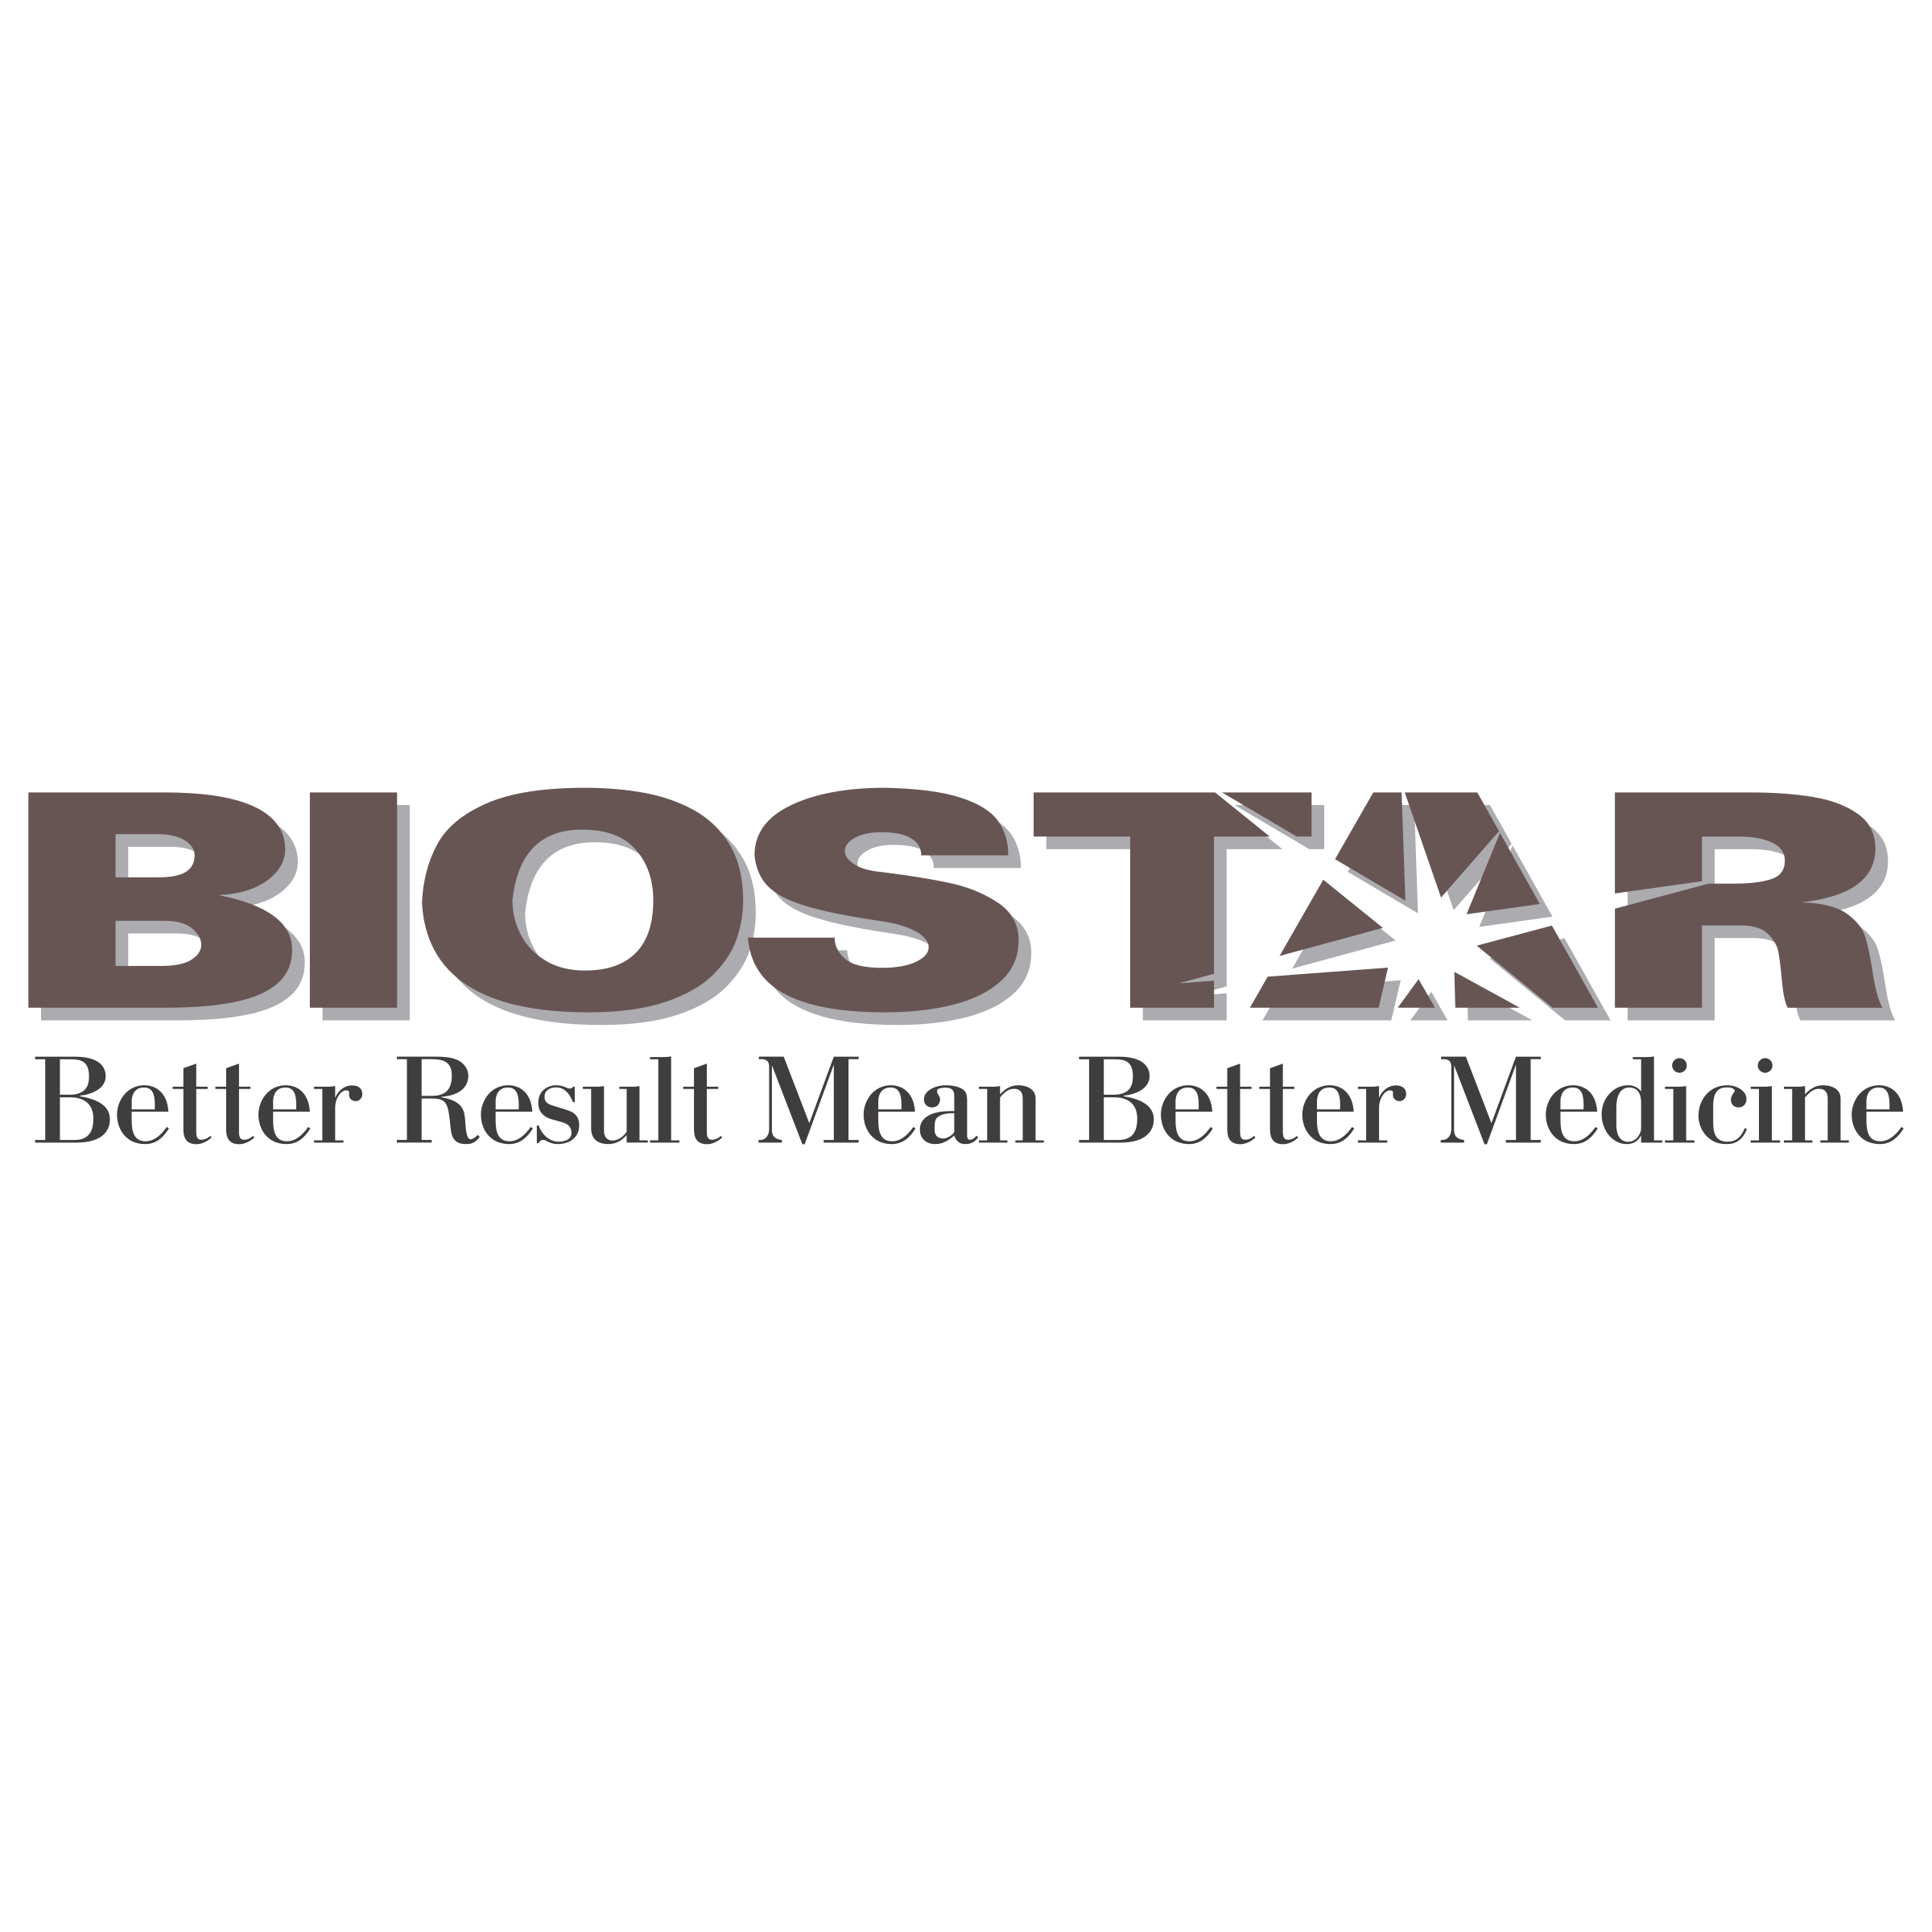 Biostar Logo - Biostar Logo PNG Transparent & SVG Vector